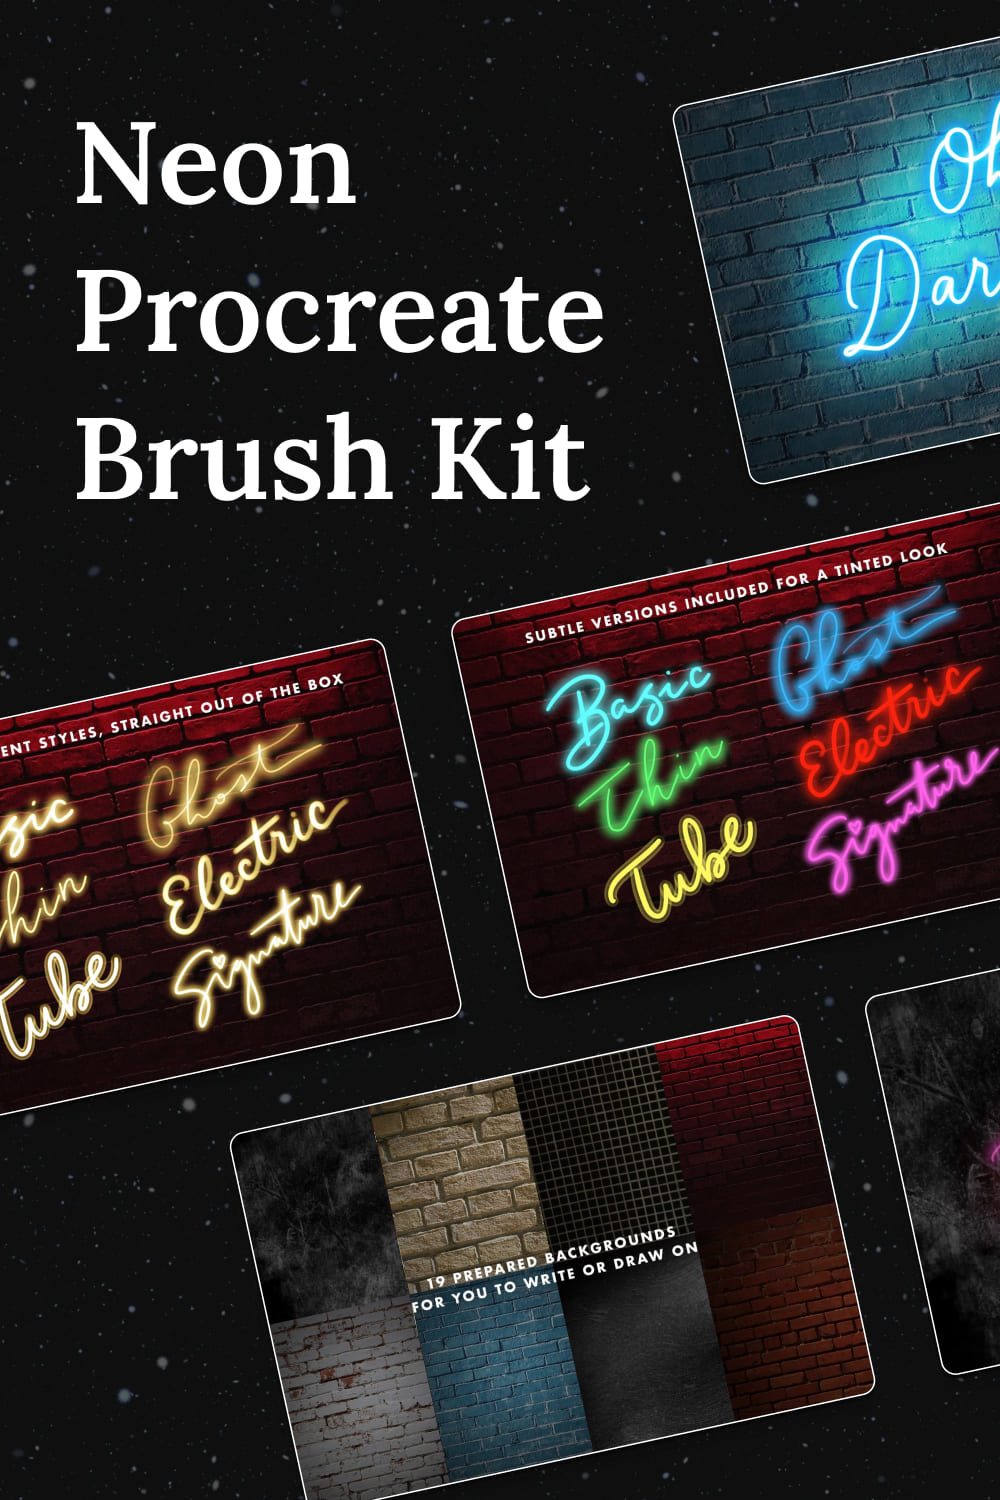 Neon Procreate Brush Kit - pinterest image preview.